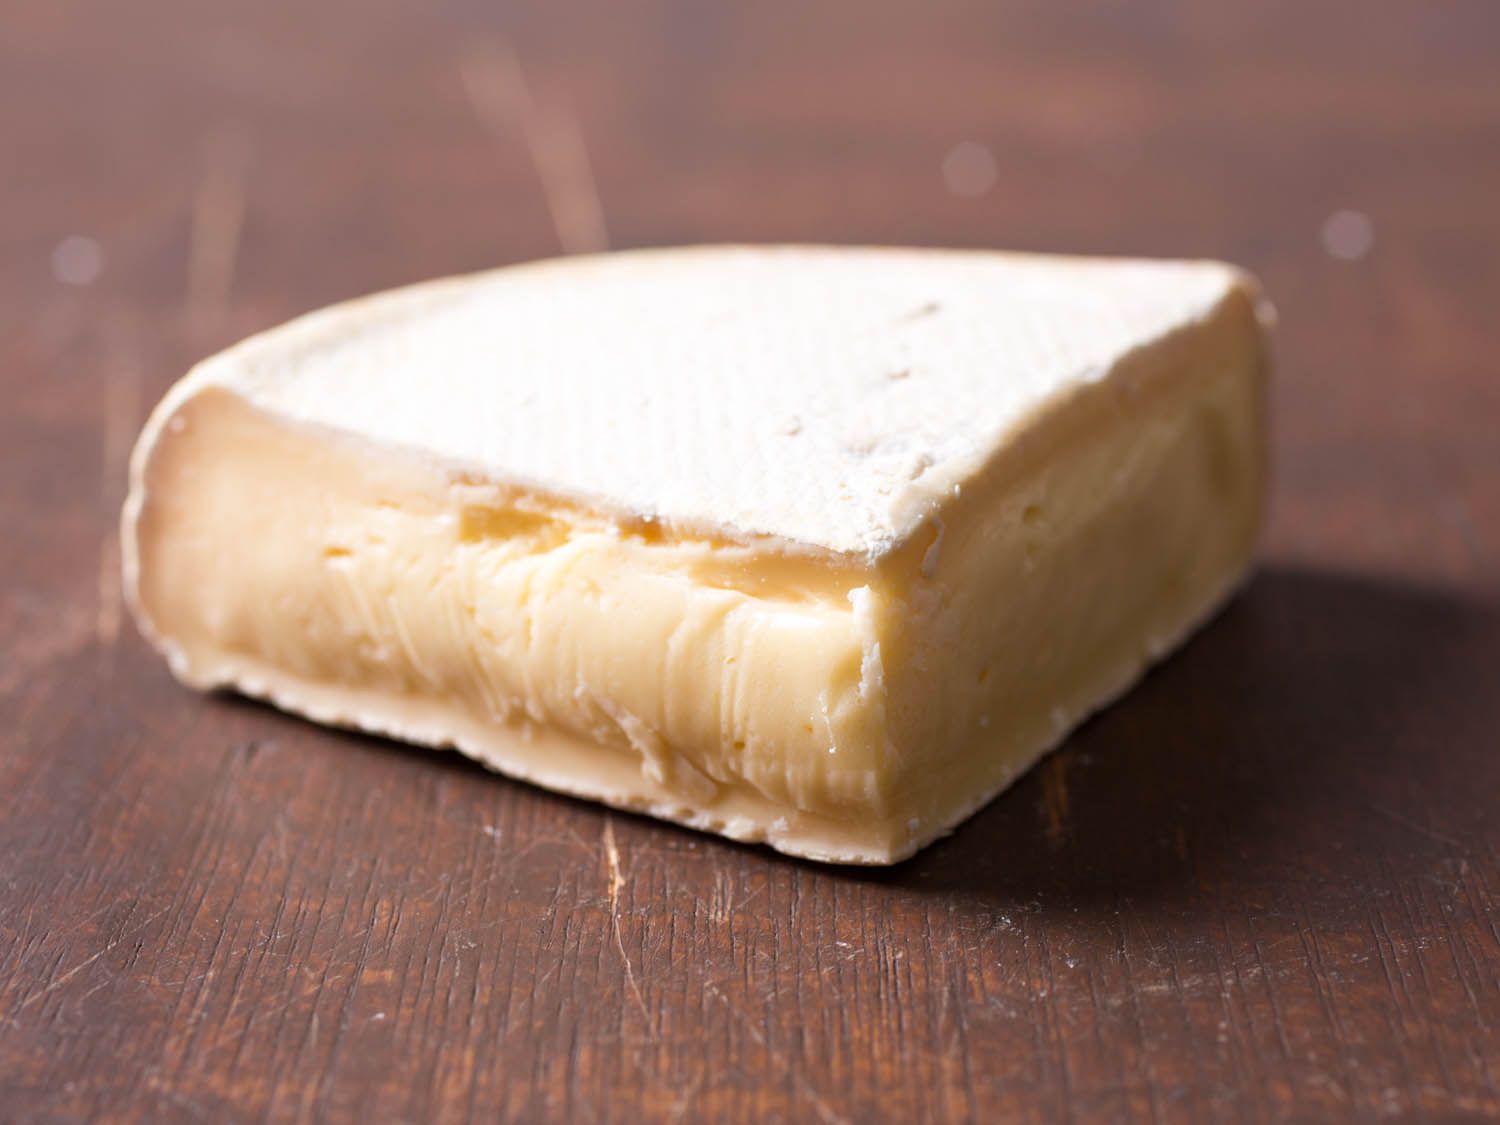 20141021 - cheese101 -南-奶酪-跳舞蕨类植物- sequatchie vicky -沃斯克- 4. - jpg